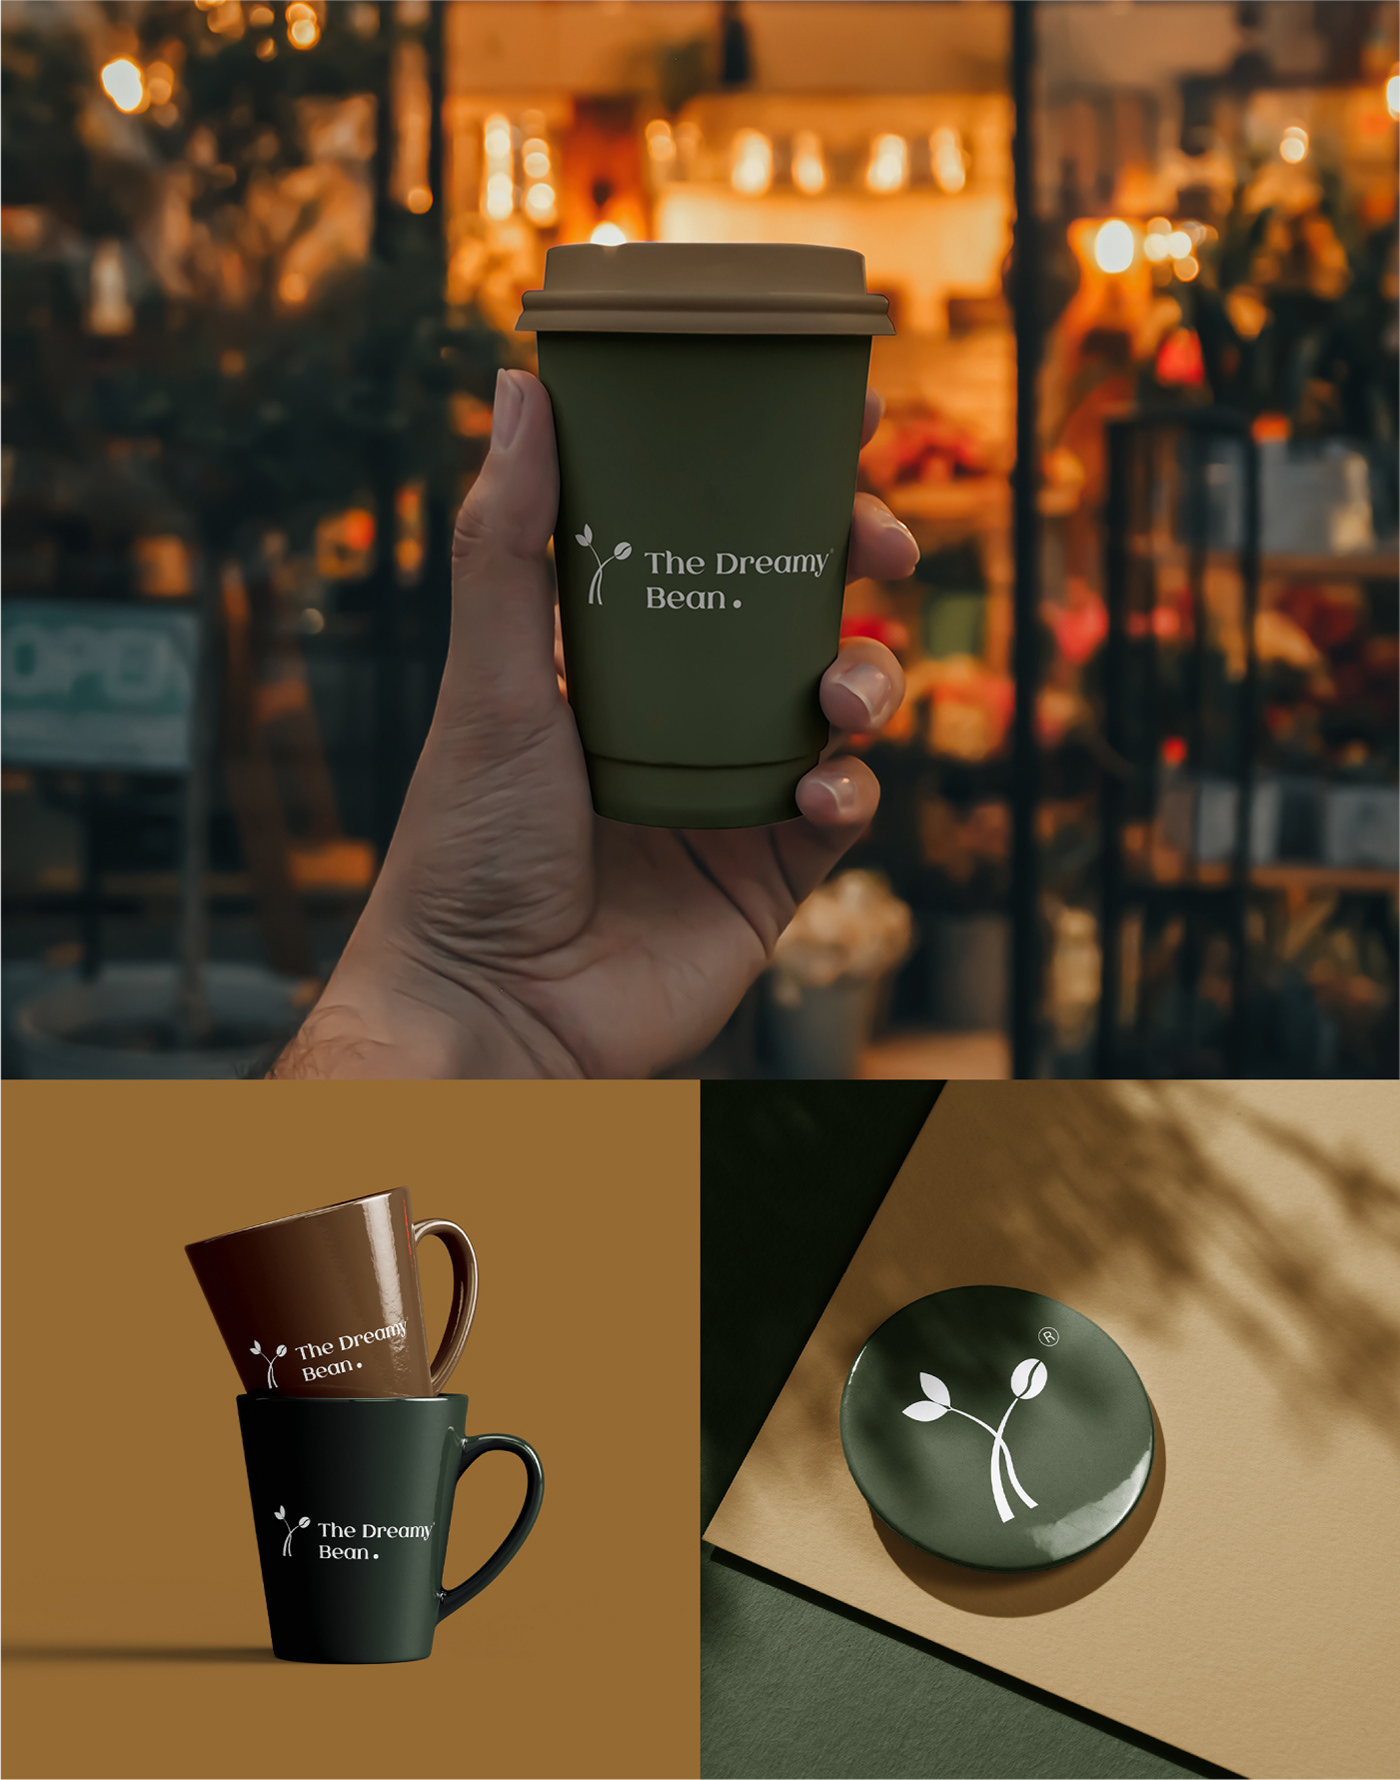 Logo Design logo Branding design visual identity coffee logo coffee shop coffeebranding coffeebrand cafe logo resturant